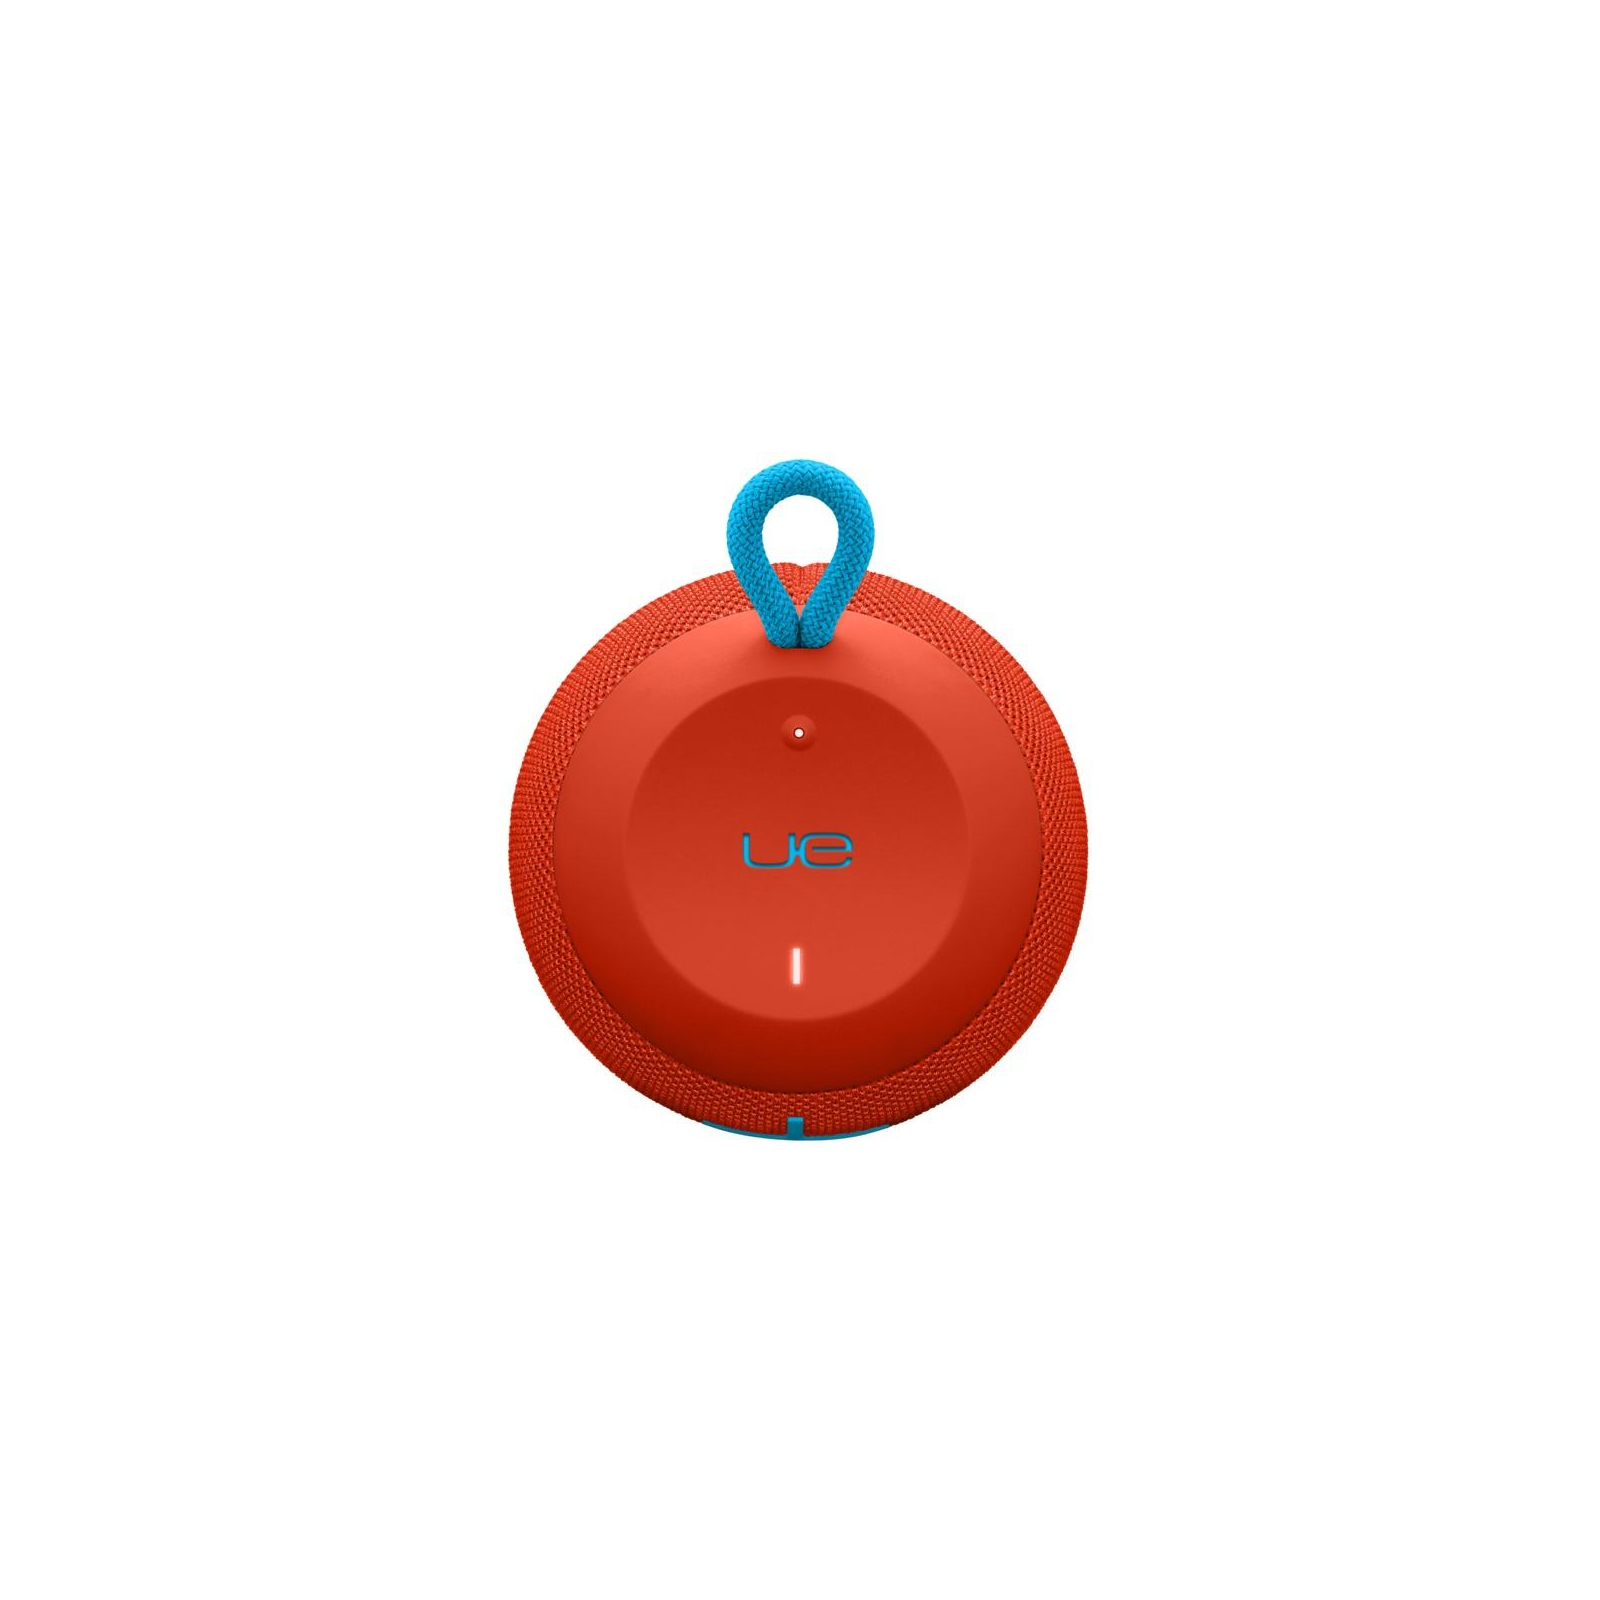 Акустическая система Ultimate Ears Wonderboom Fireball Red (984-000853) изображение 6